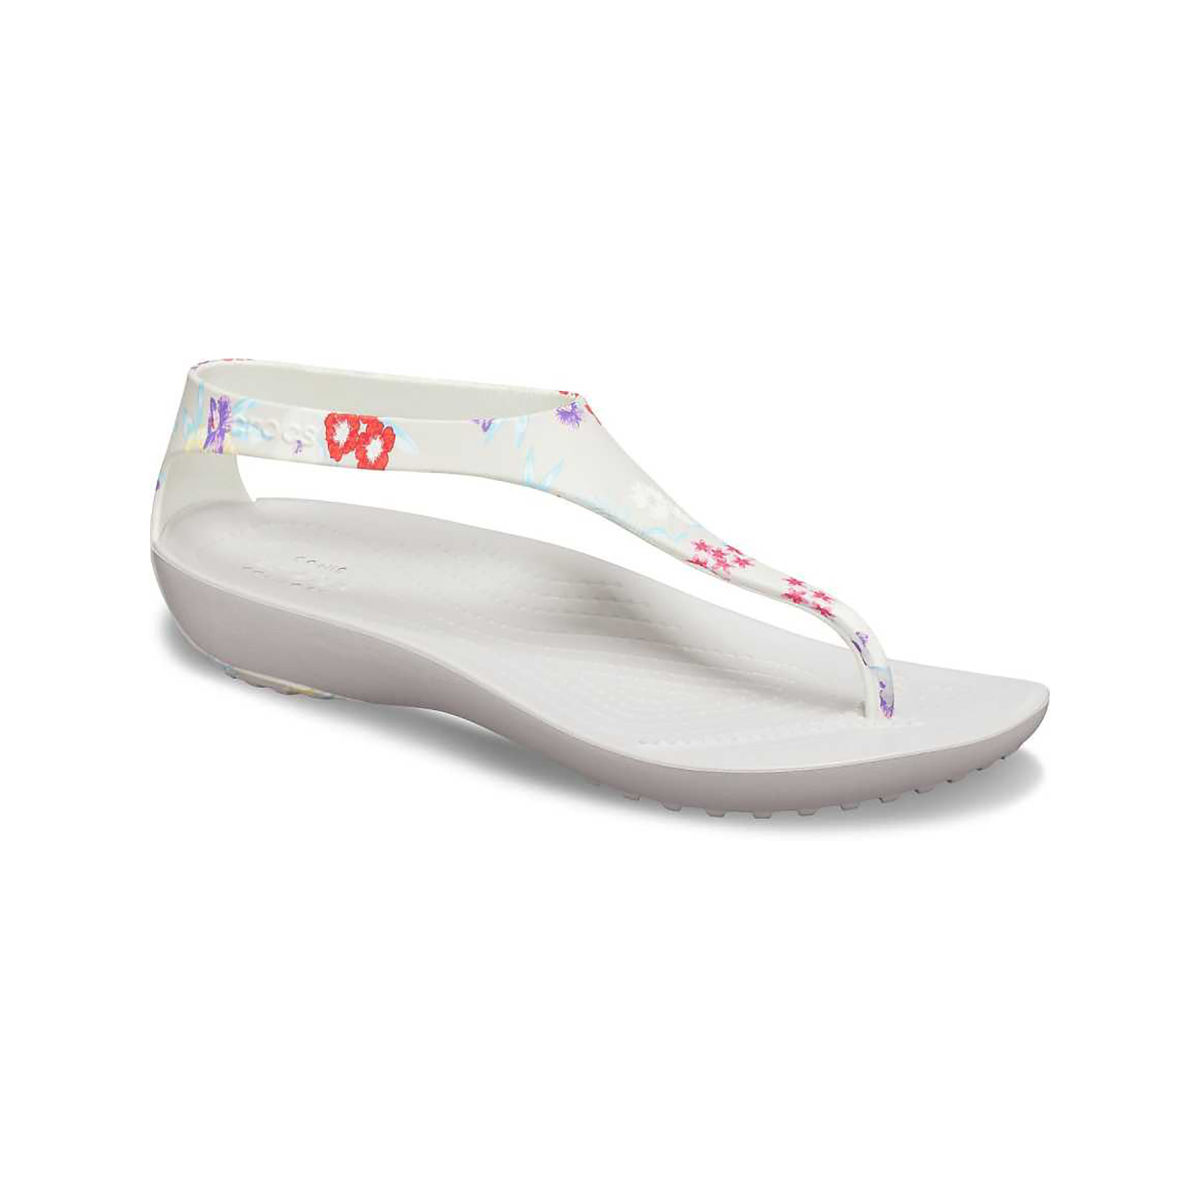 Crocs Classic Sandal - White